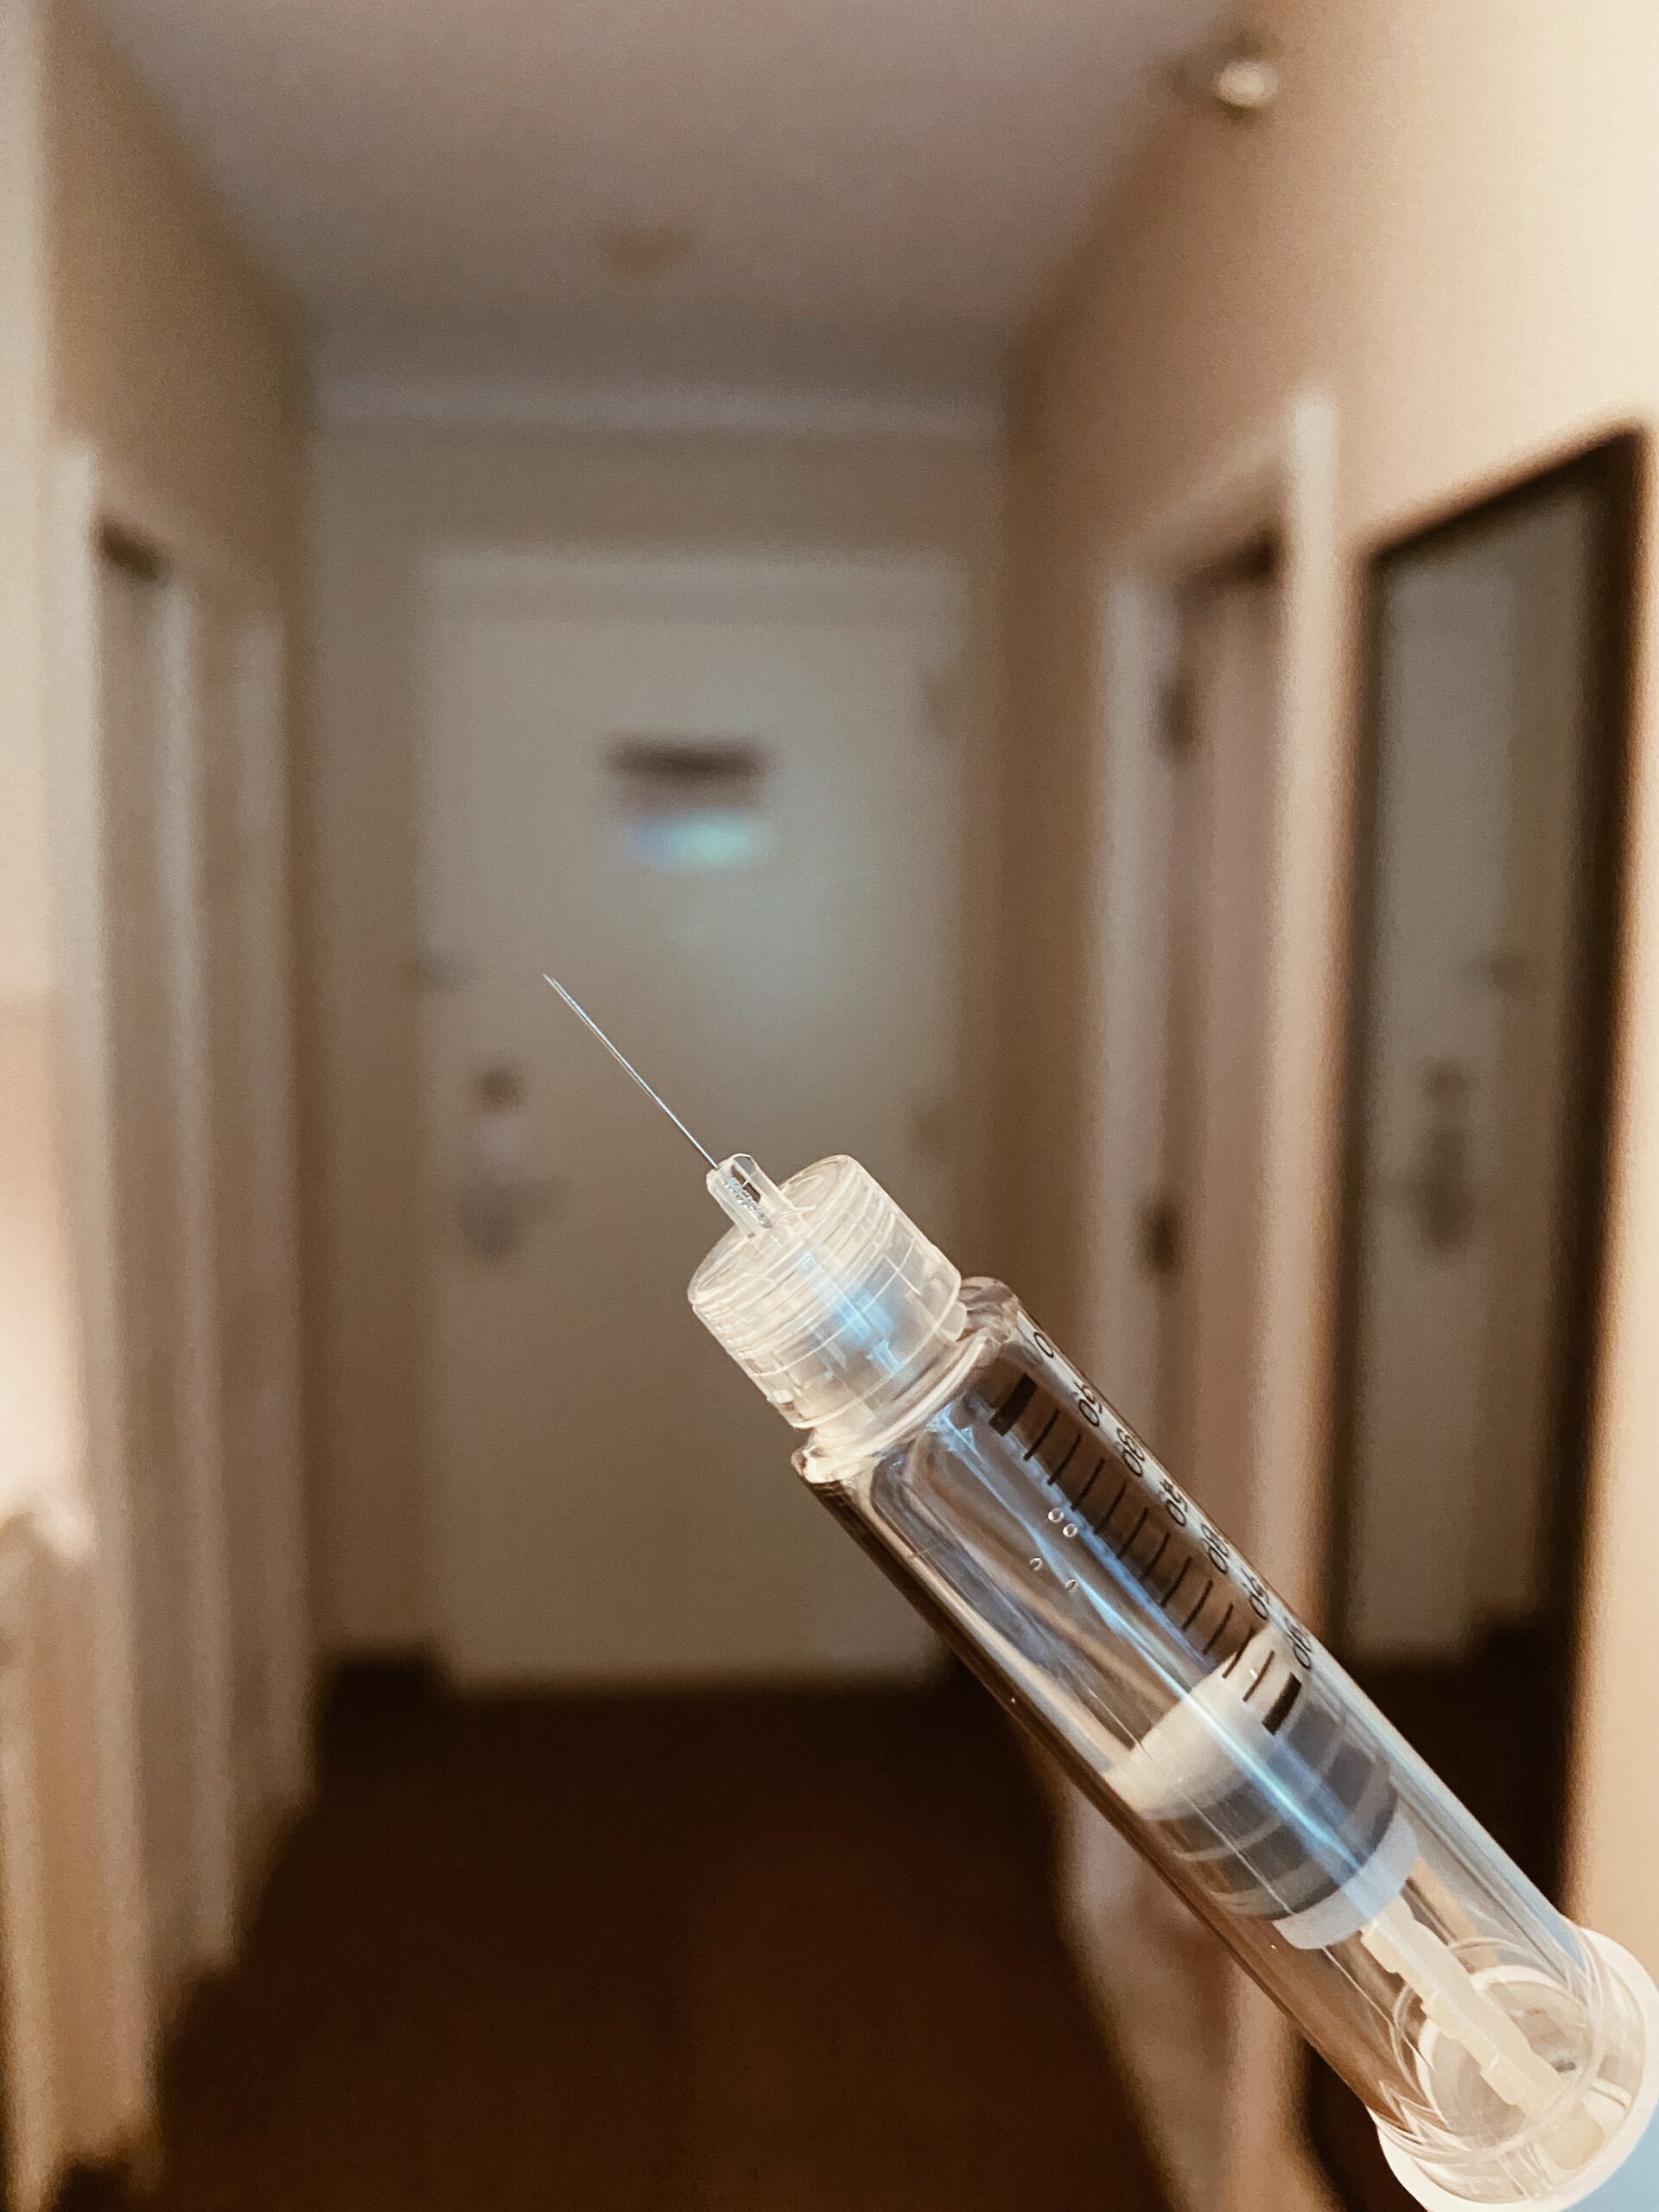 Needle and syringe to be inserted